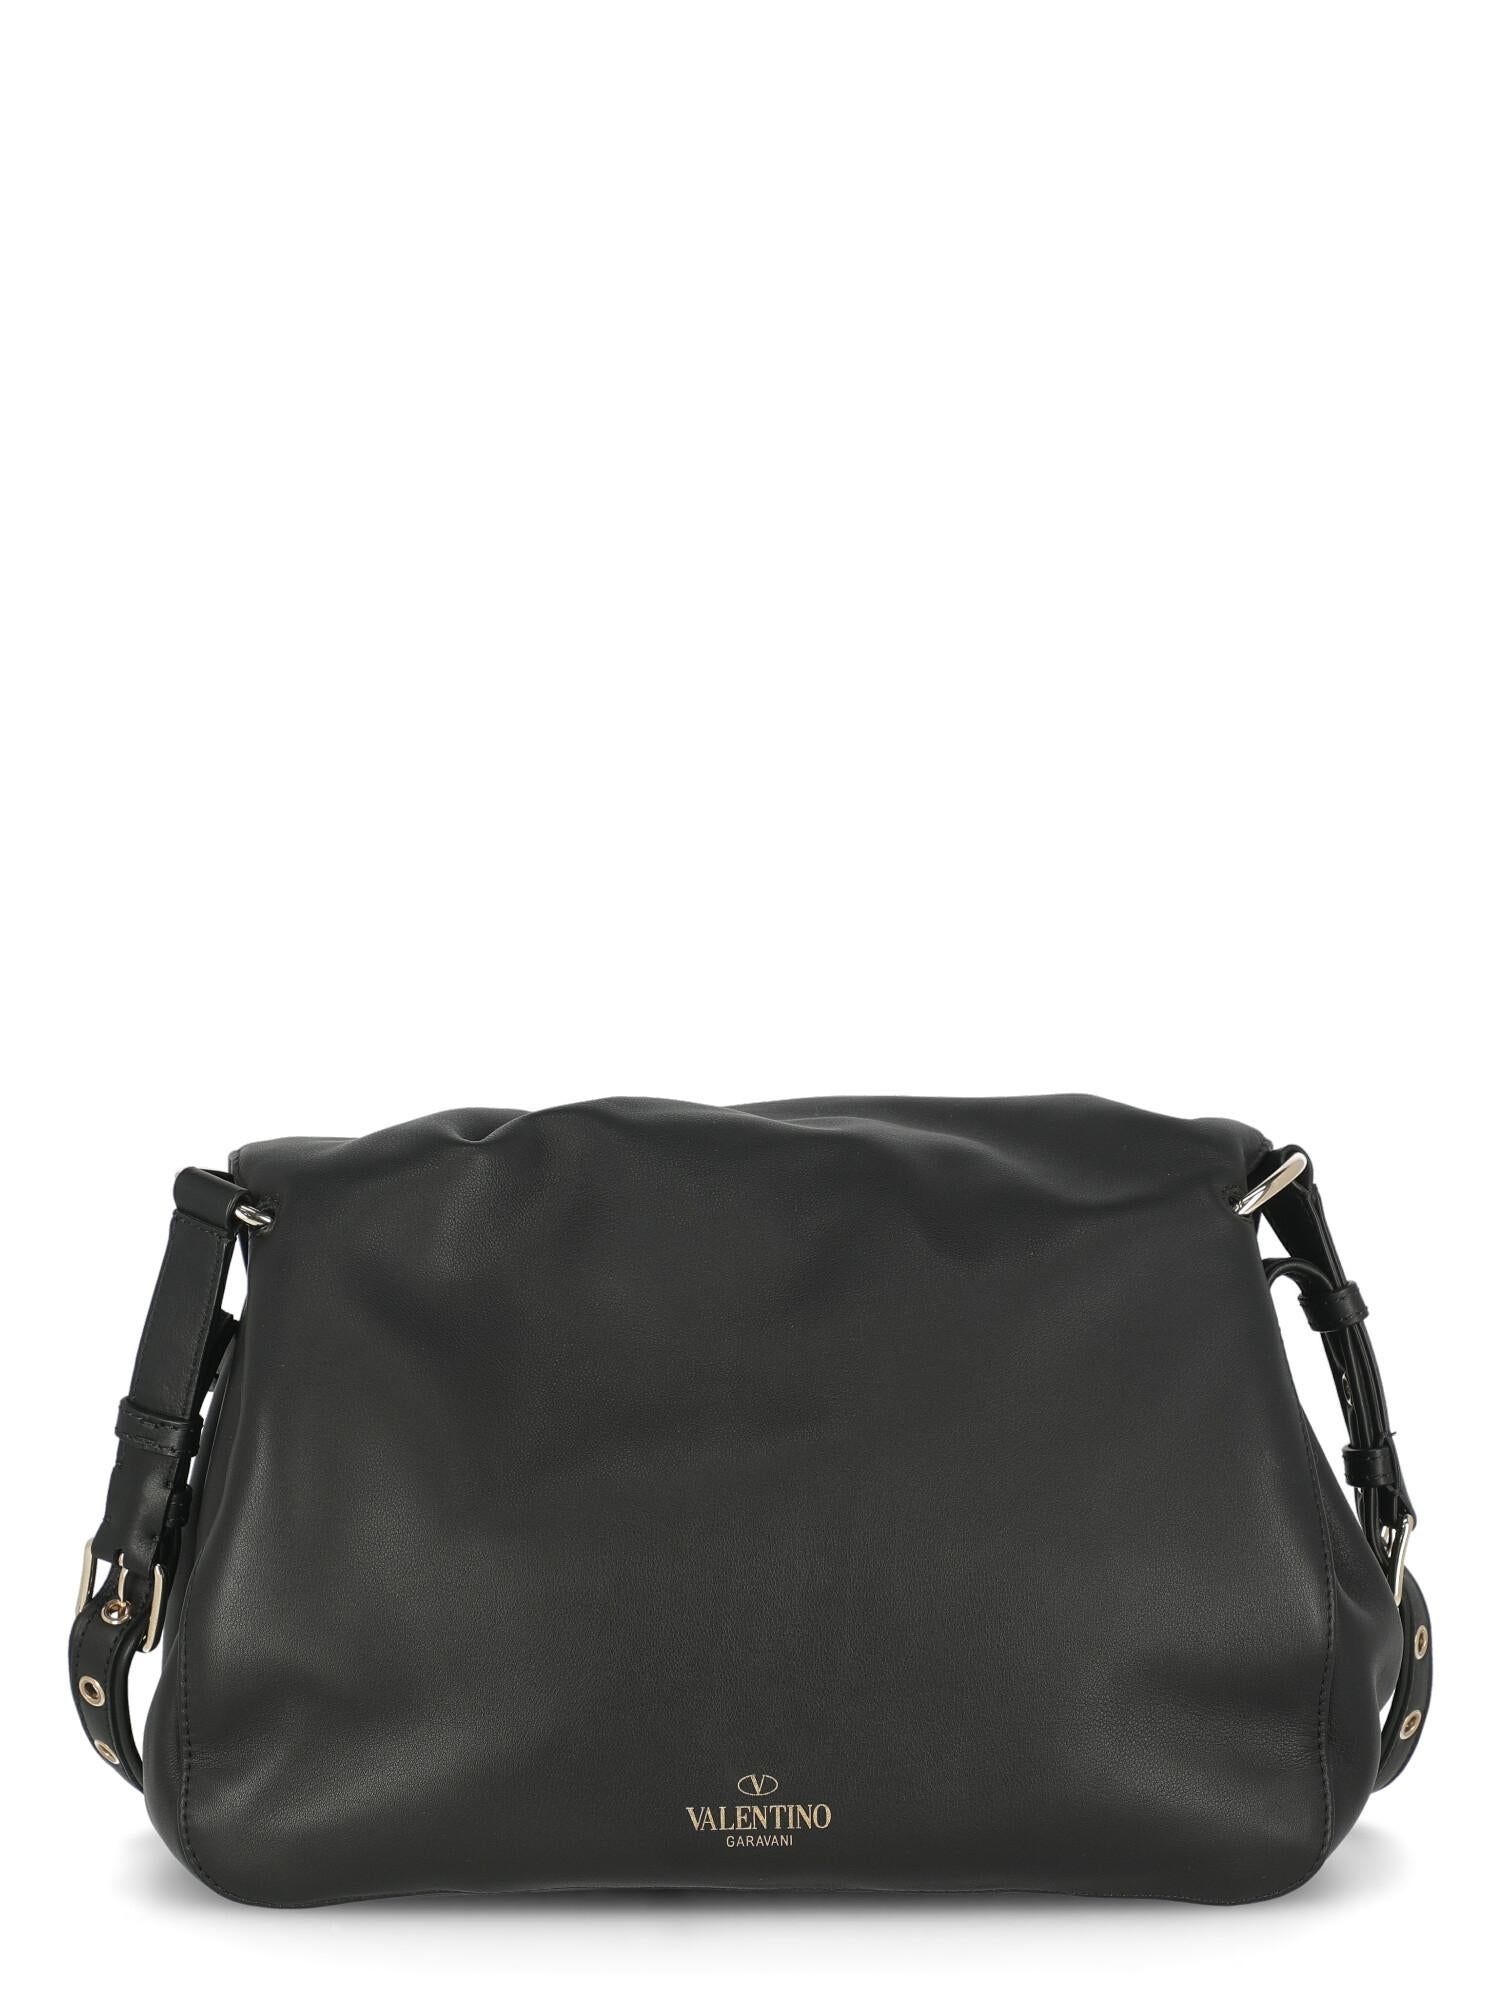 Women's Valentino Woman Shoulder bag  Black Leather For Sale